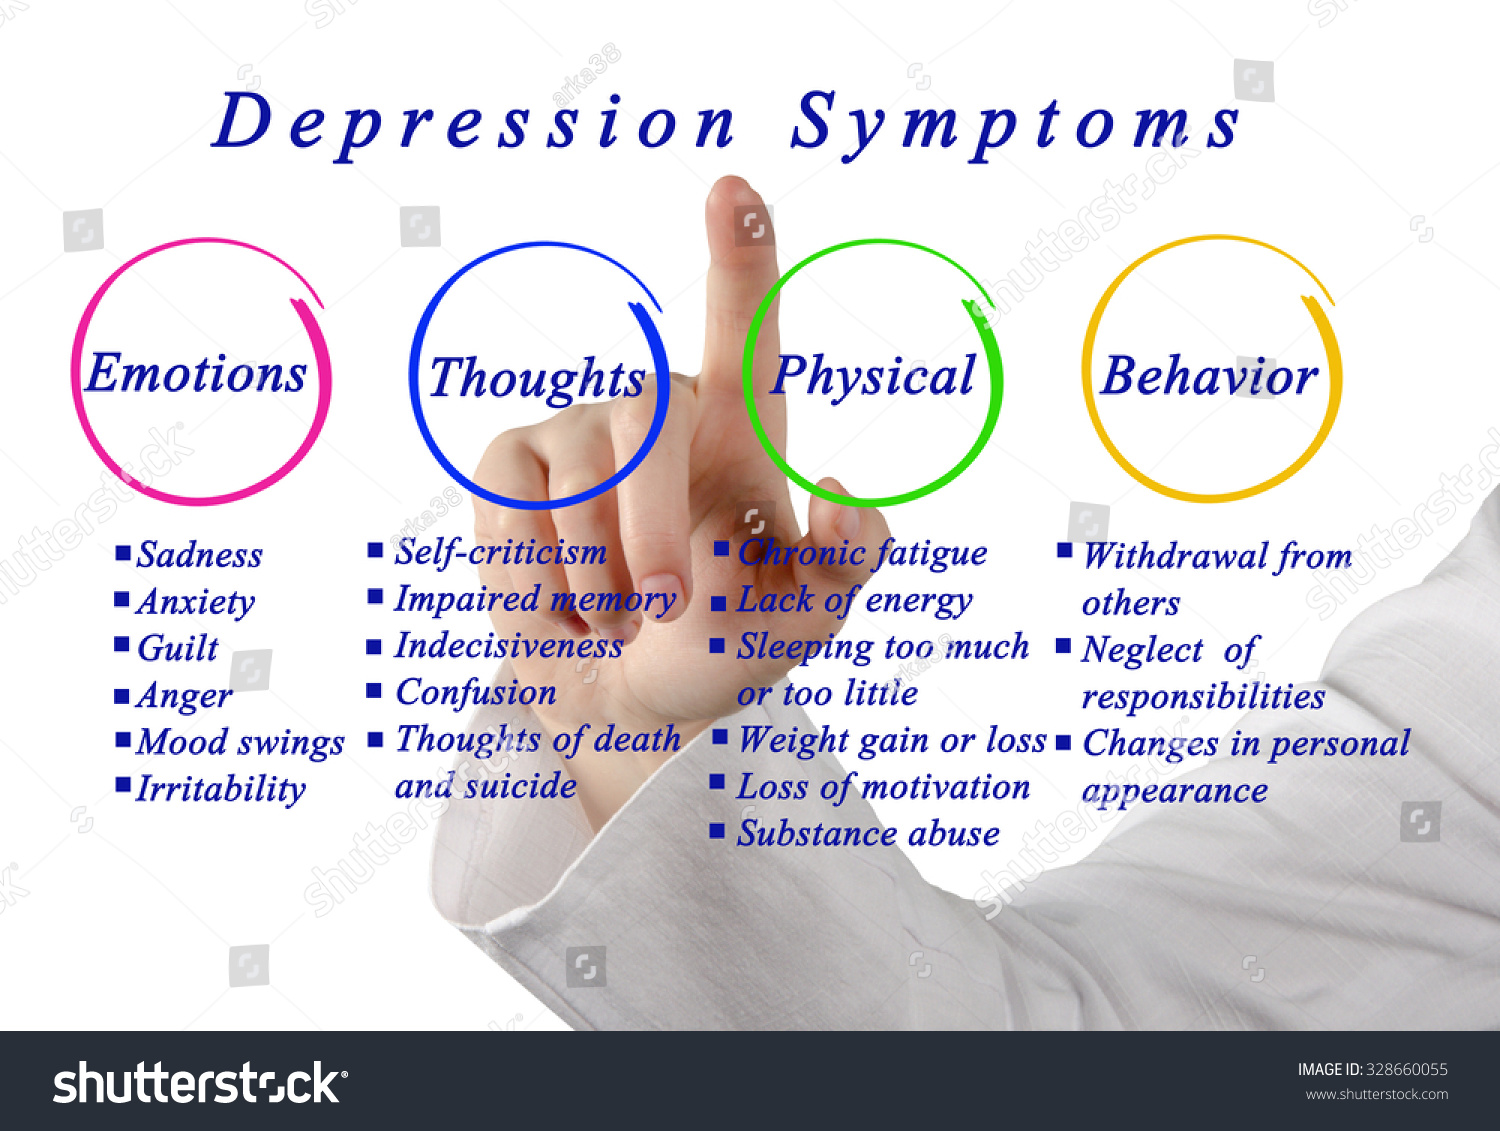 Depression Symptoms Stock Photo 328660055 : Shutterstock